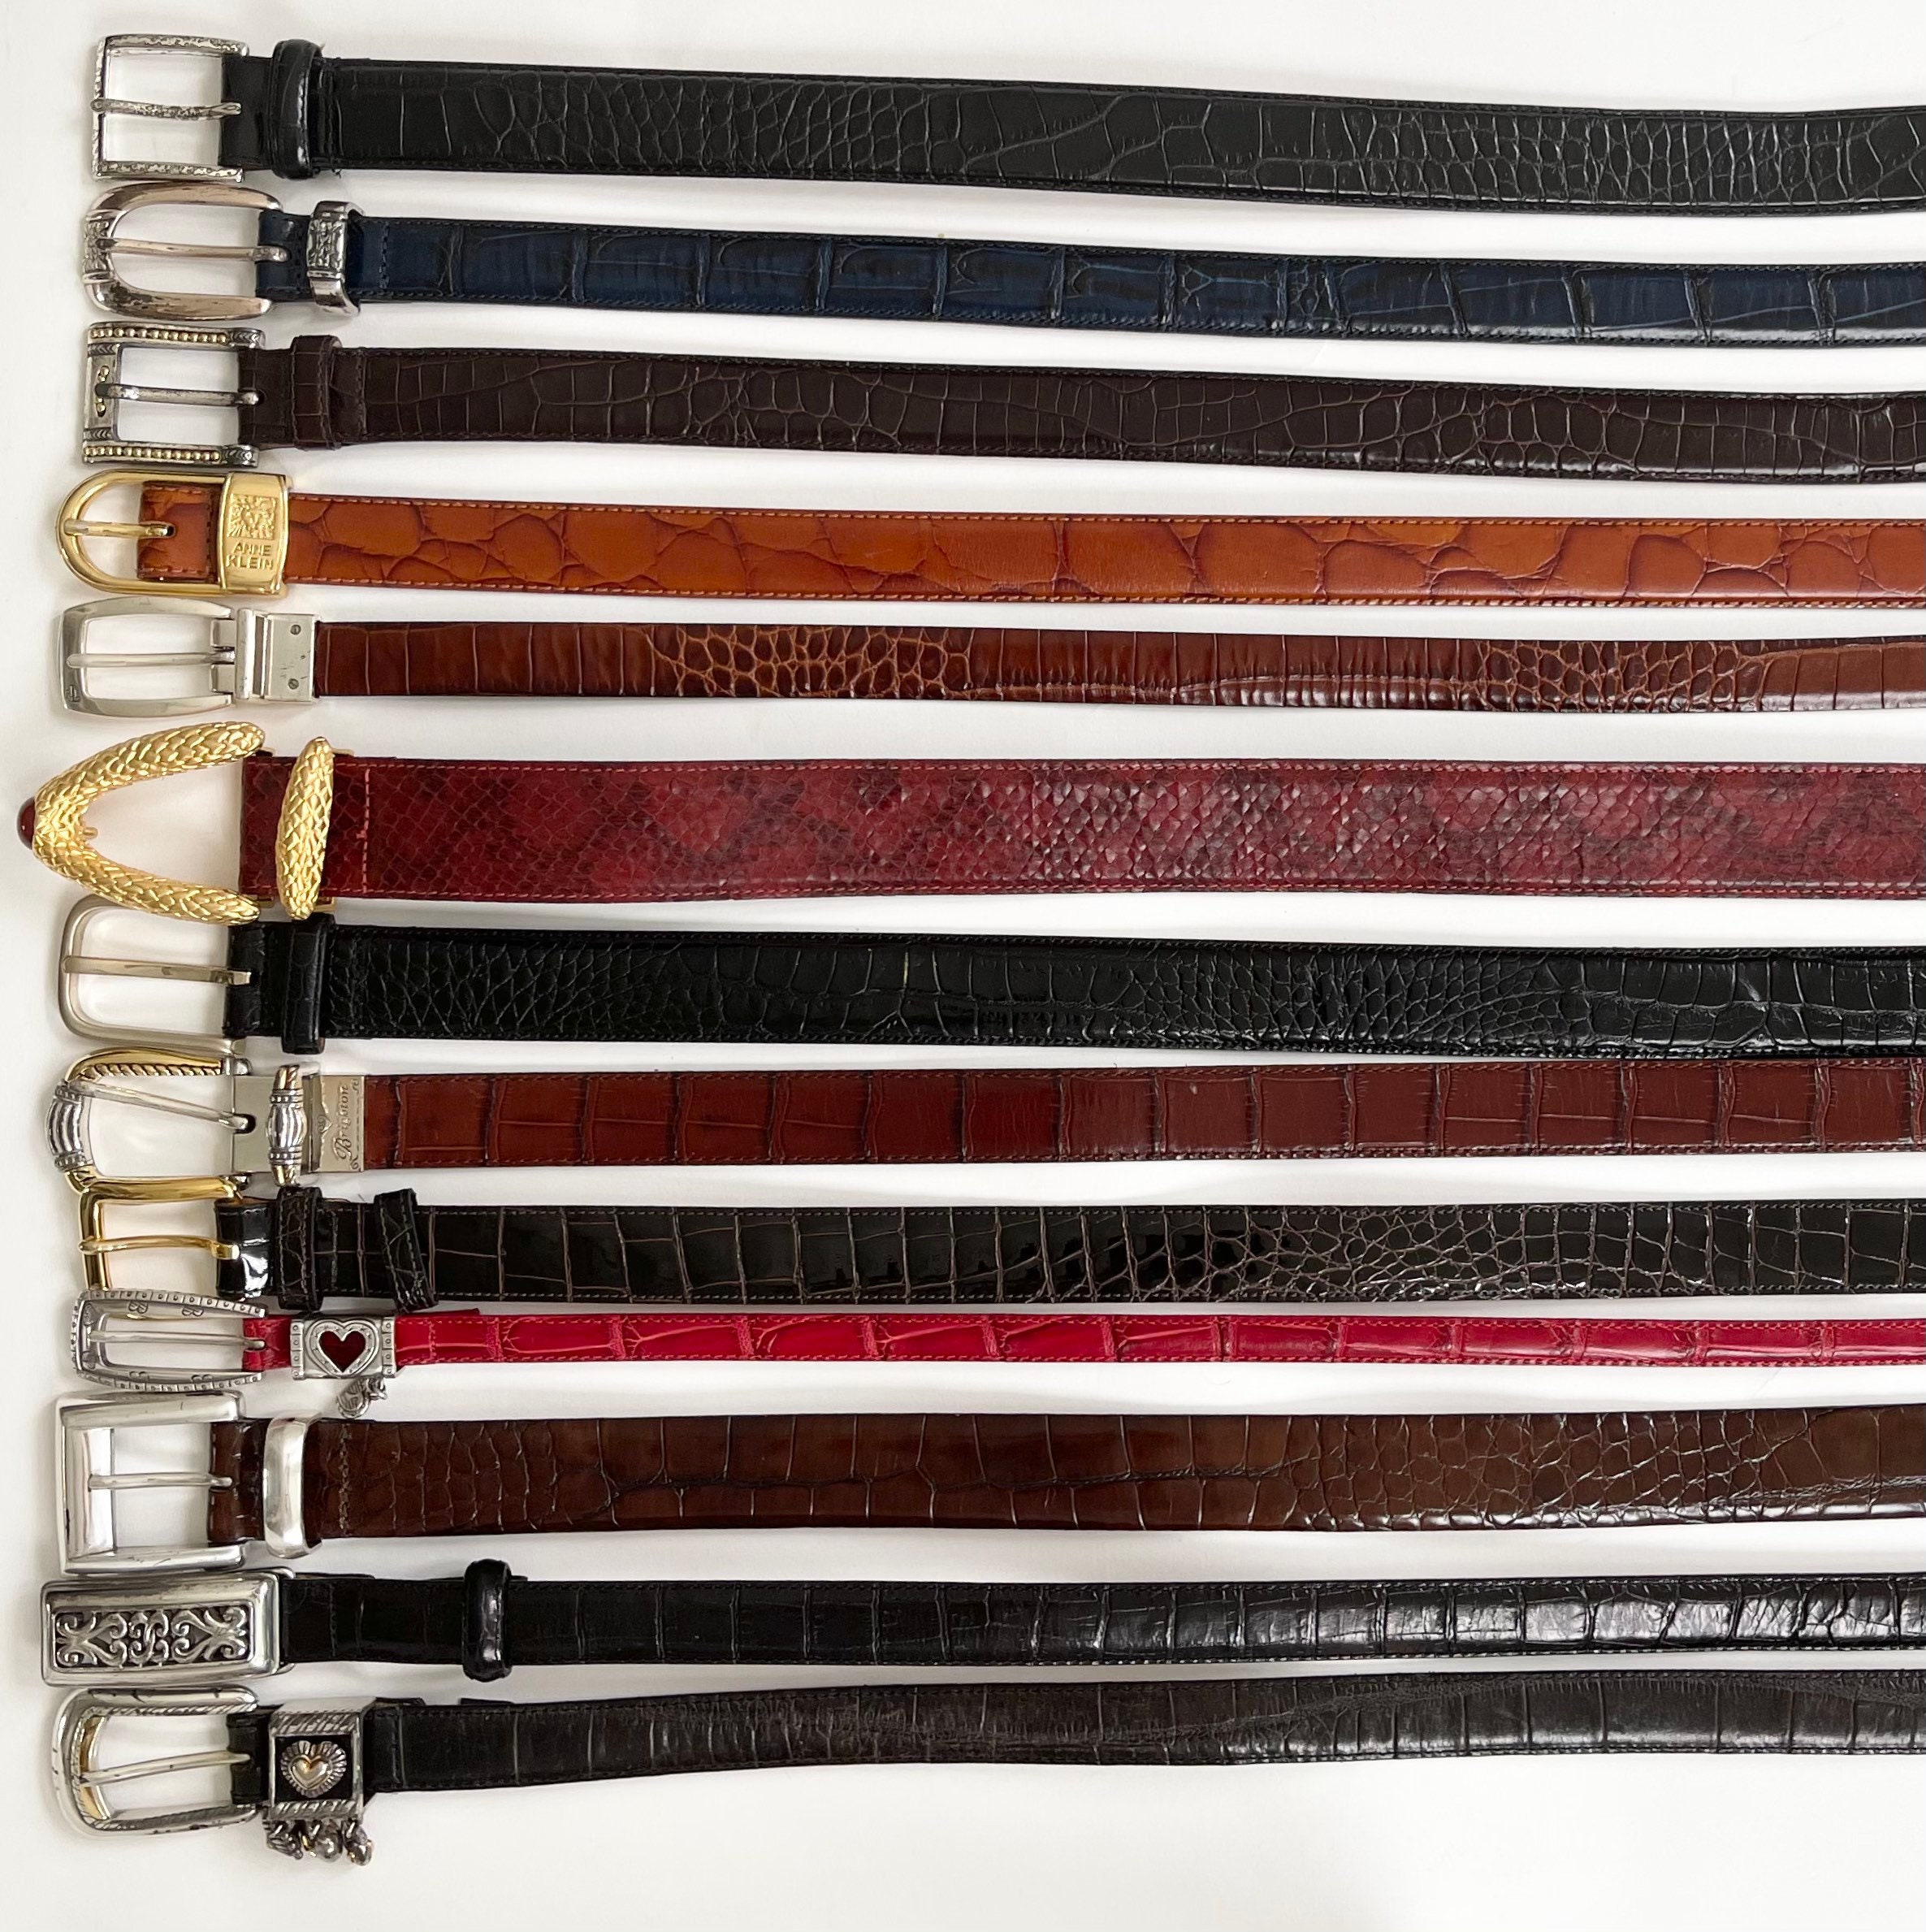 Men's Crocodile Belt Strap No Buckle | Black 1 1/8 inch 32 / 80 cm - Black | Capo Pelle